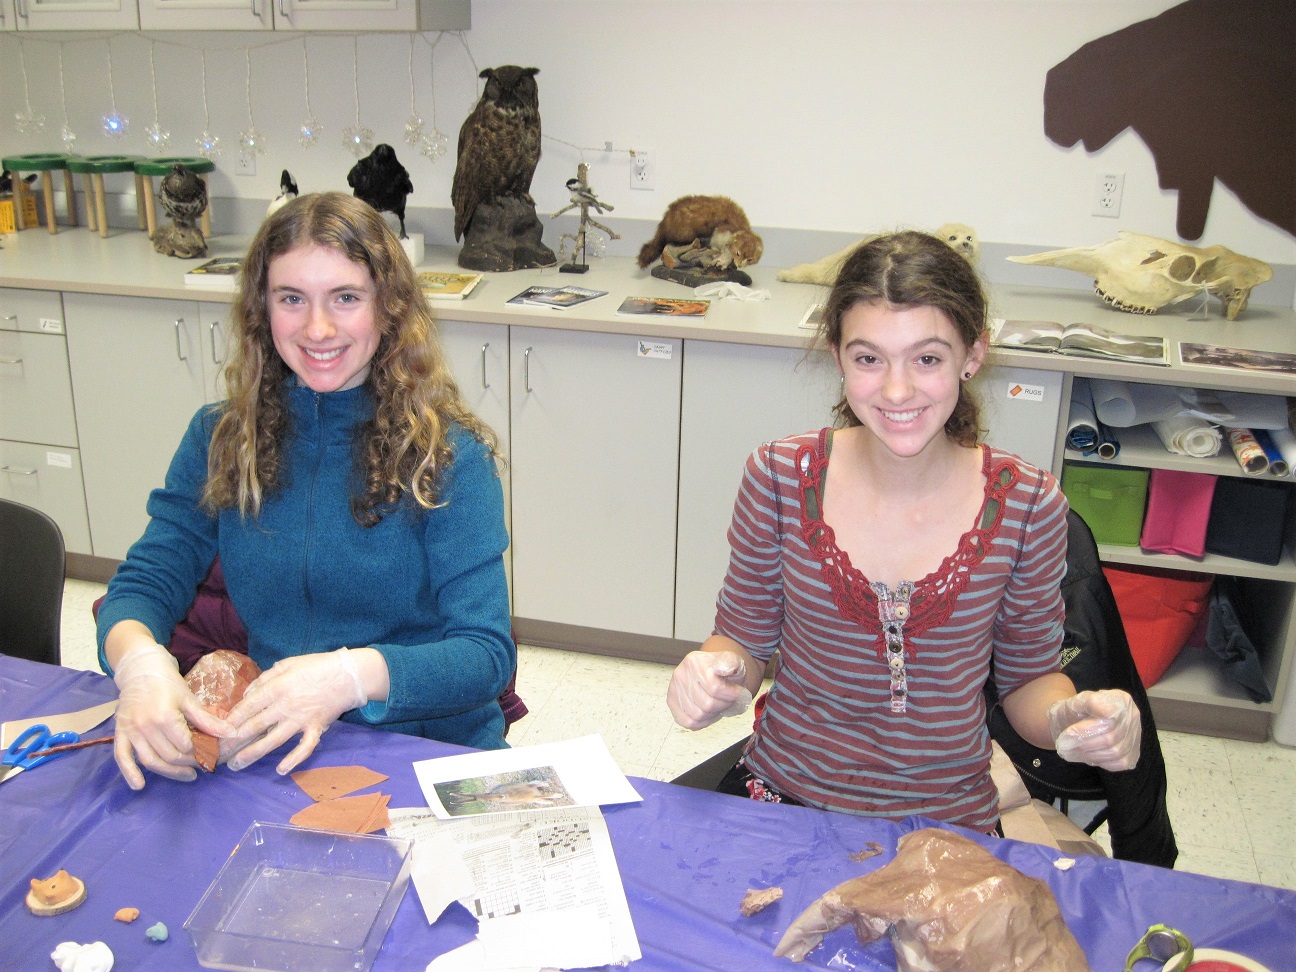 Teens work on creating animal replicas during the ARTSci Teen Studio program.